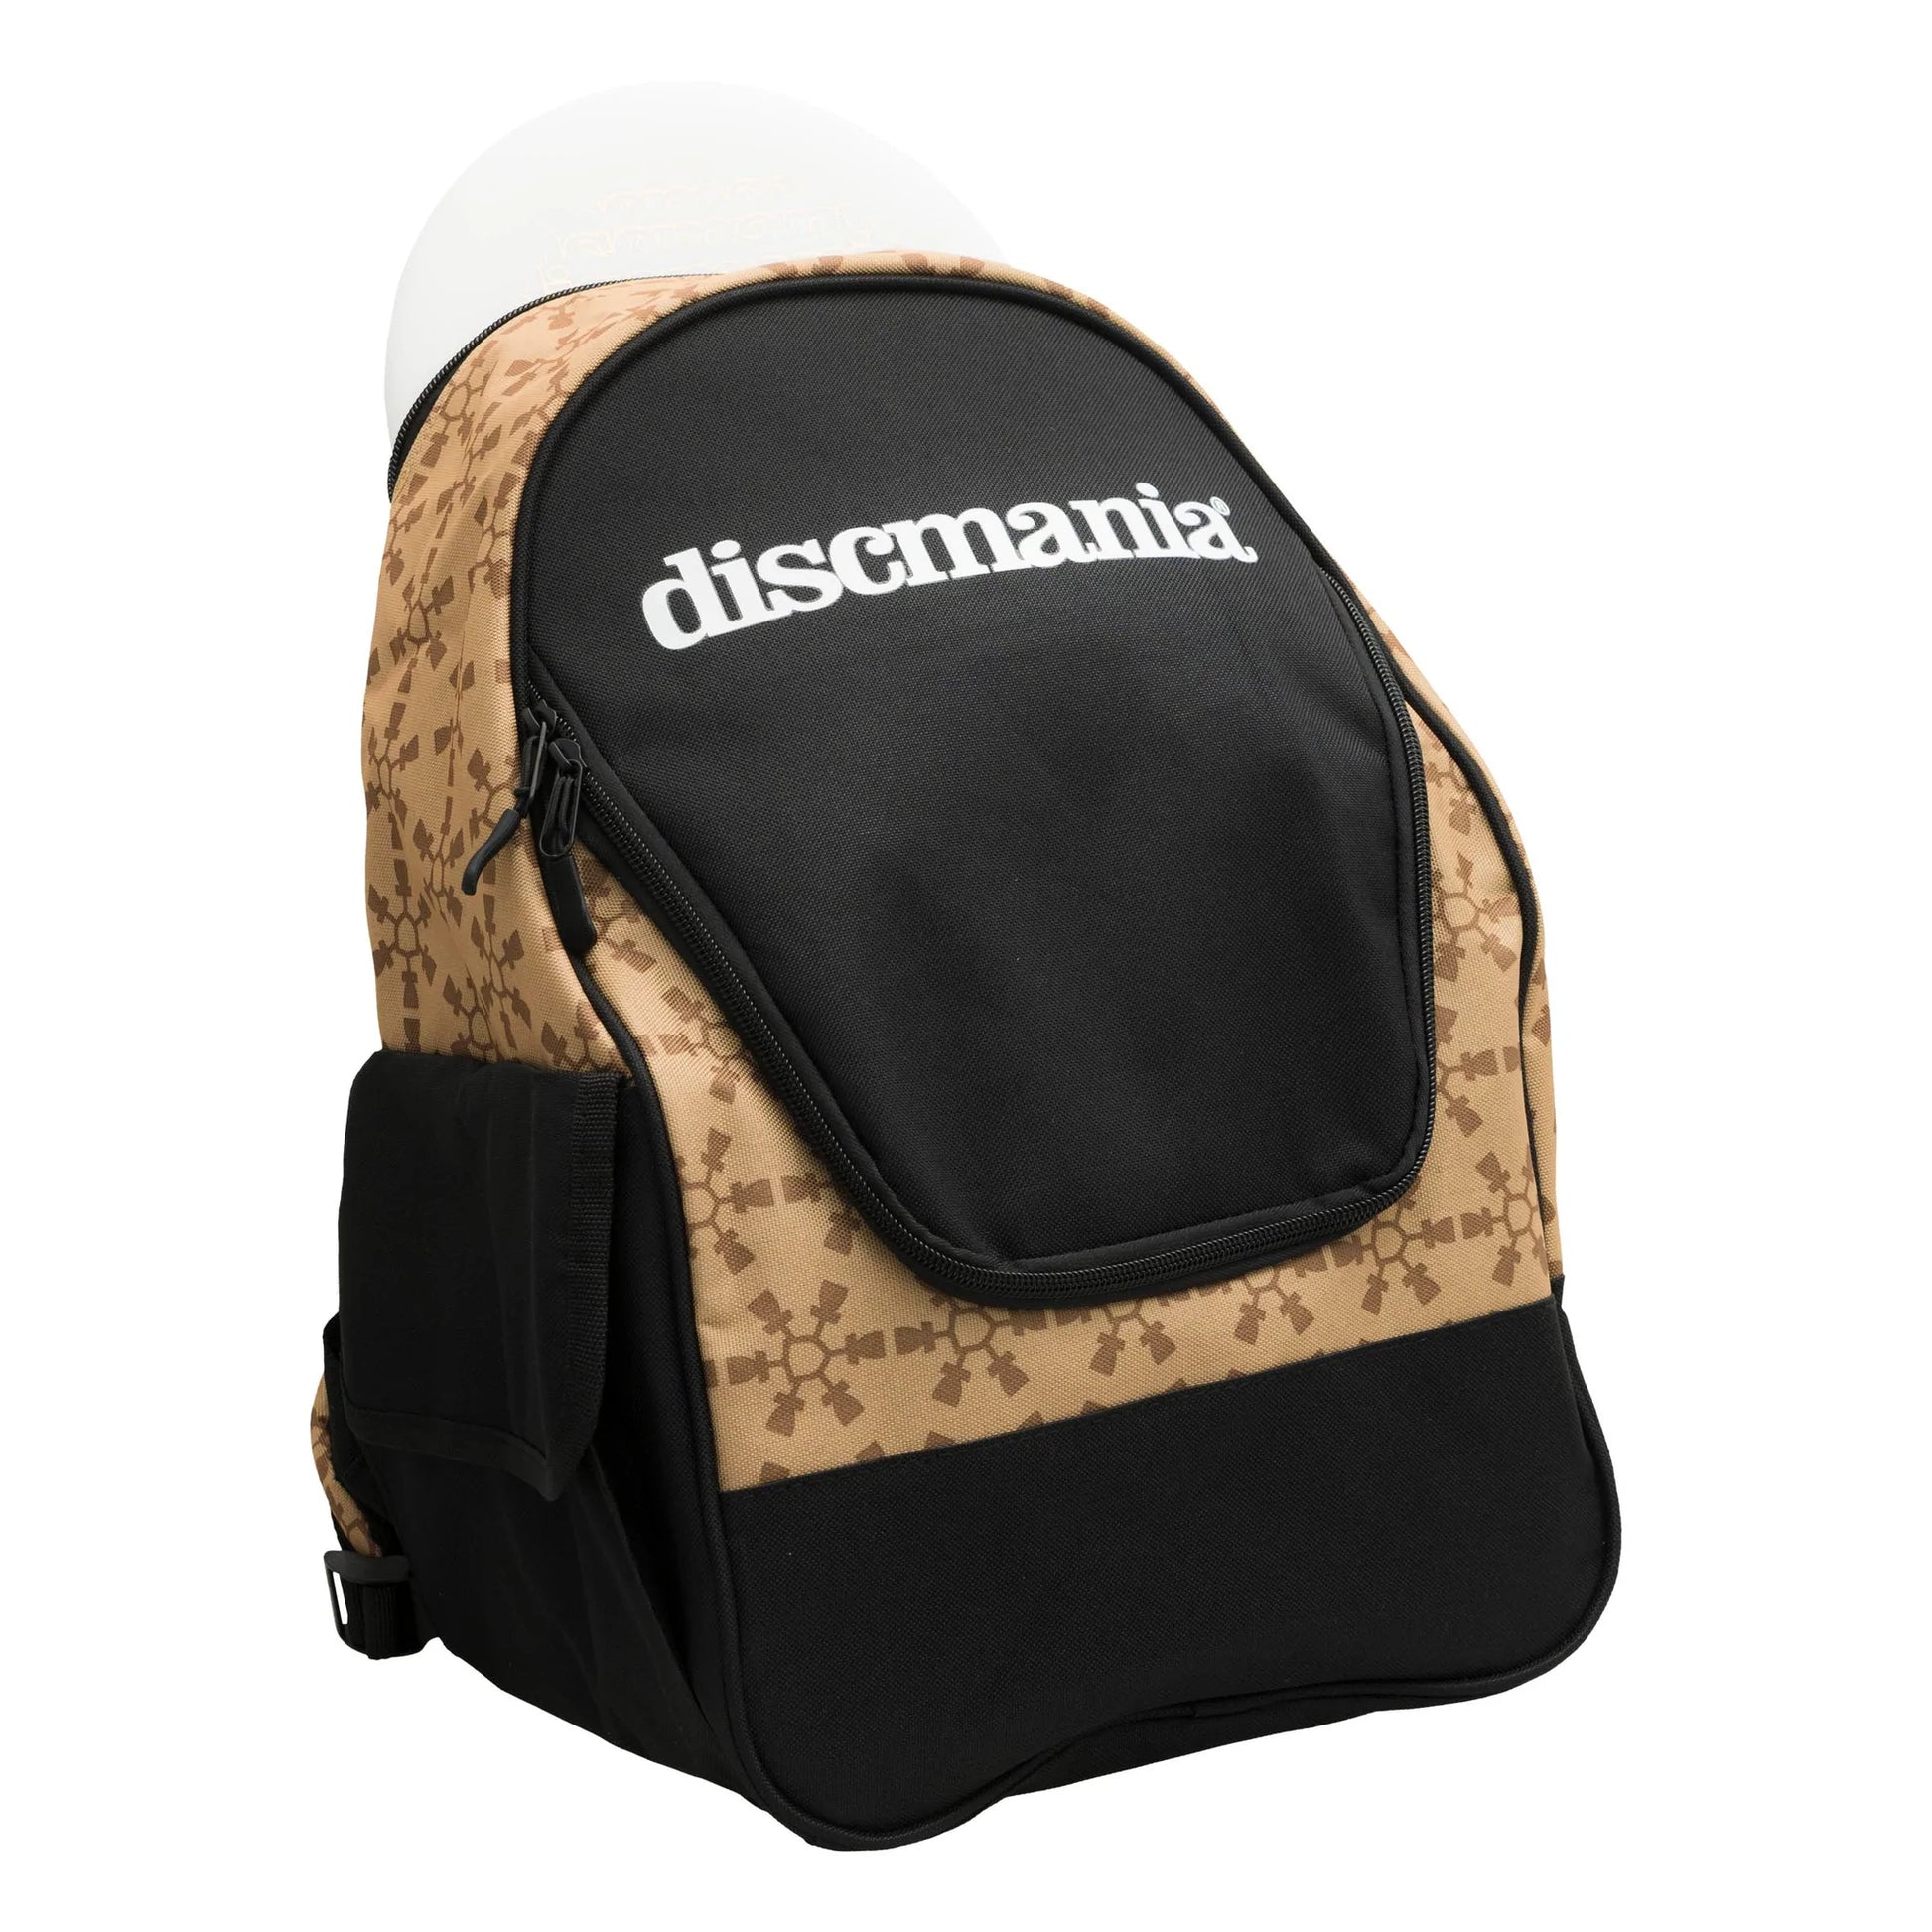 Fanatic Go Backpack Discmania